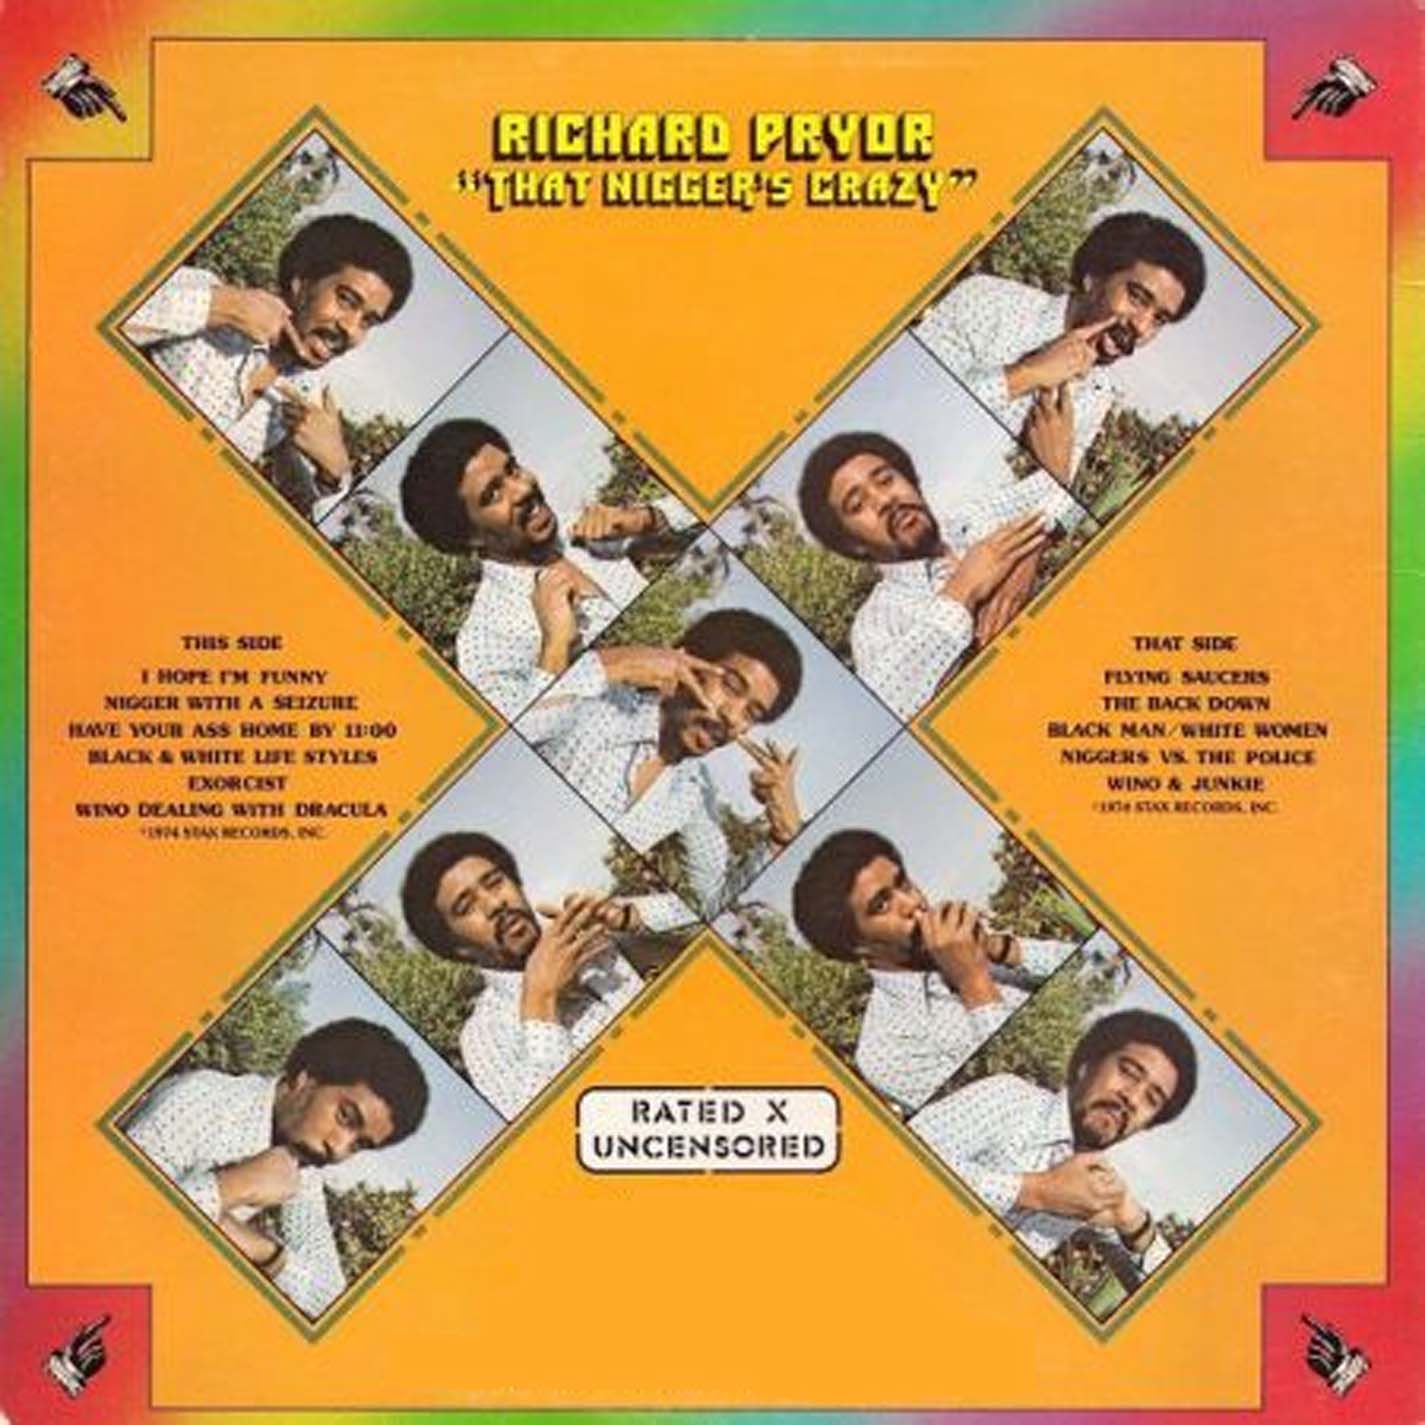 RICHARD PRYOR - THAT NIGGER CRAZY (CD LP) c1974